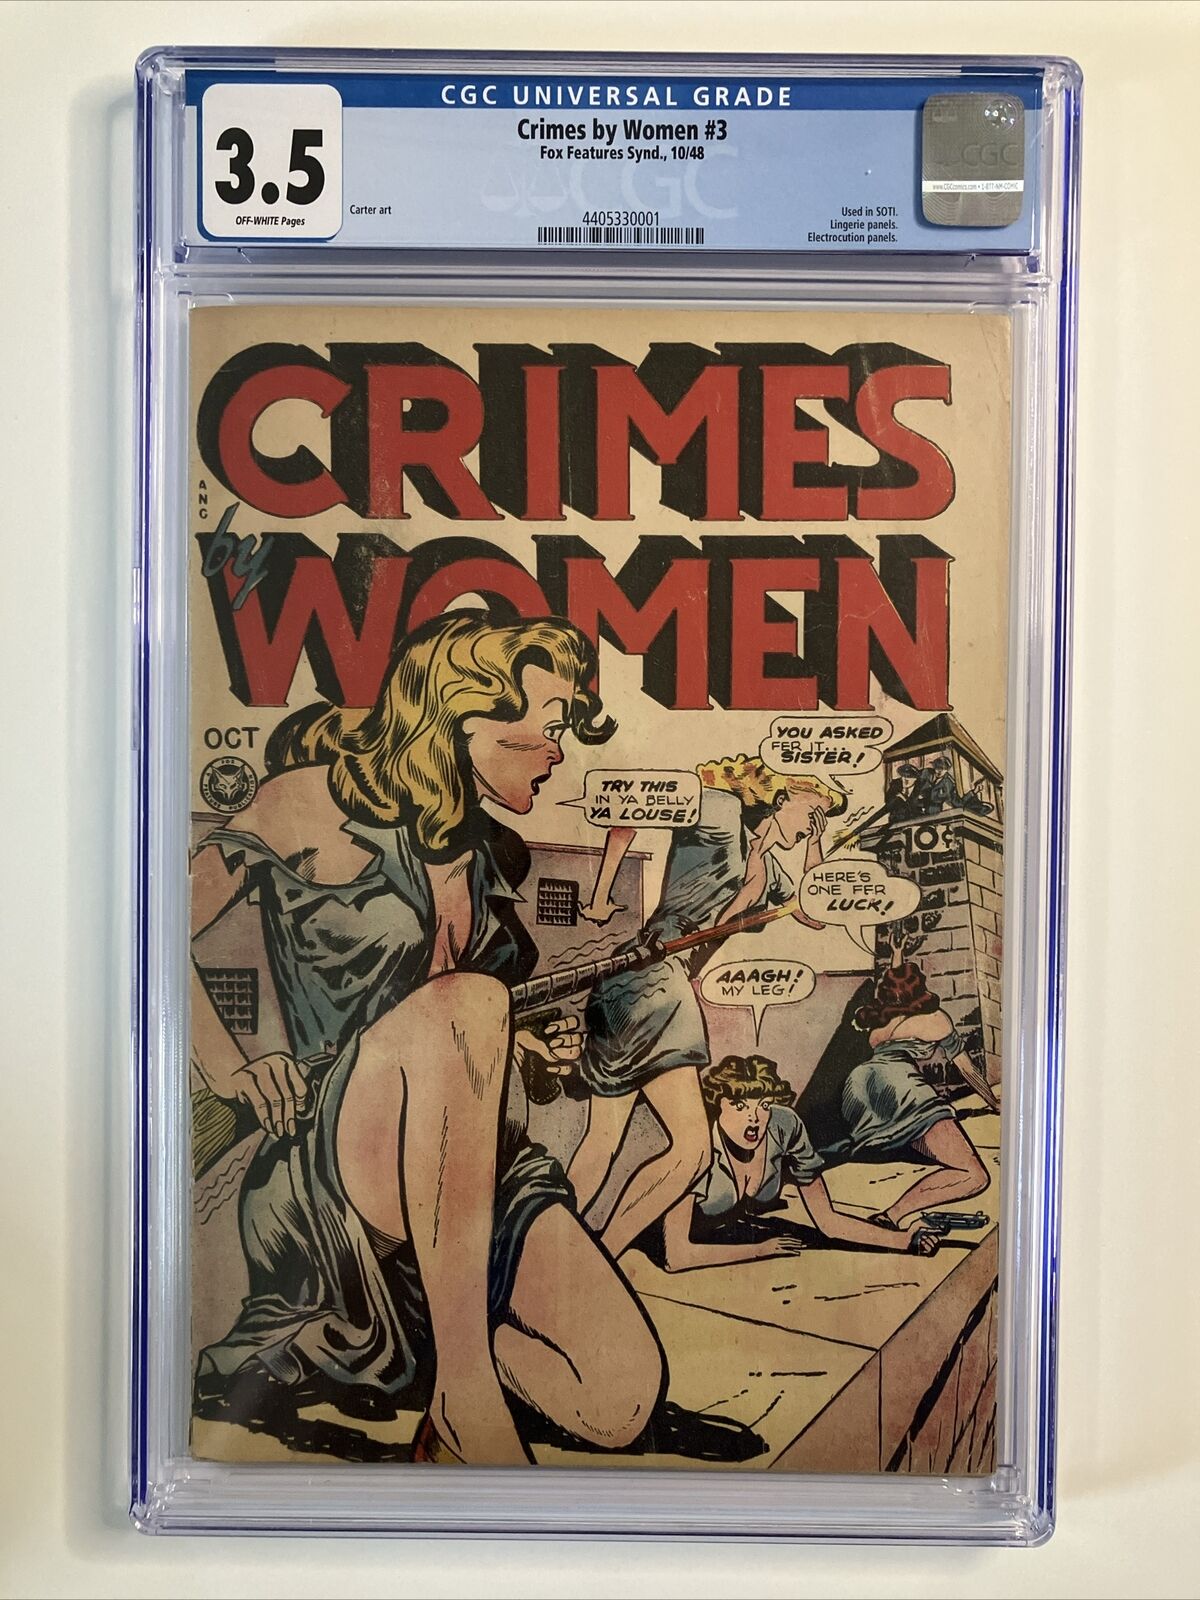 Crimes By Women #3 (1948) CGC 3.5 SOTI Fox Features Syndicate GGA Headlights